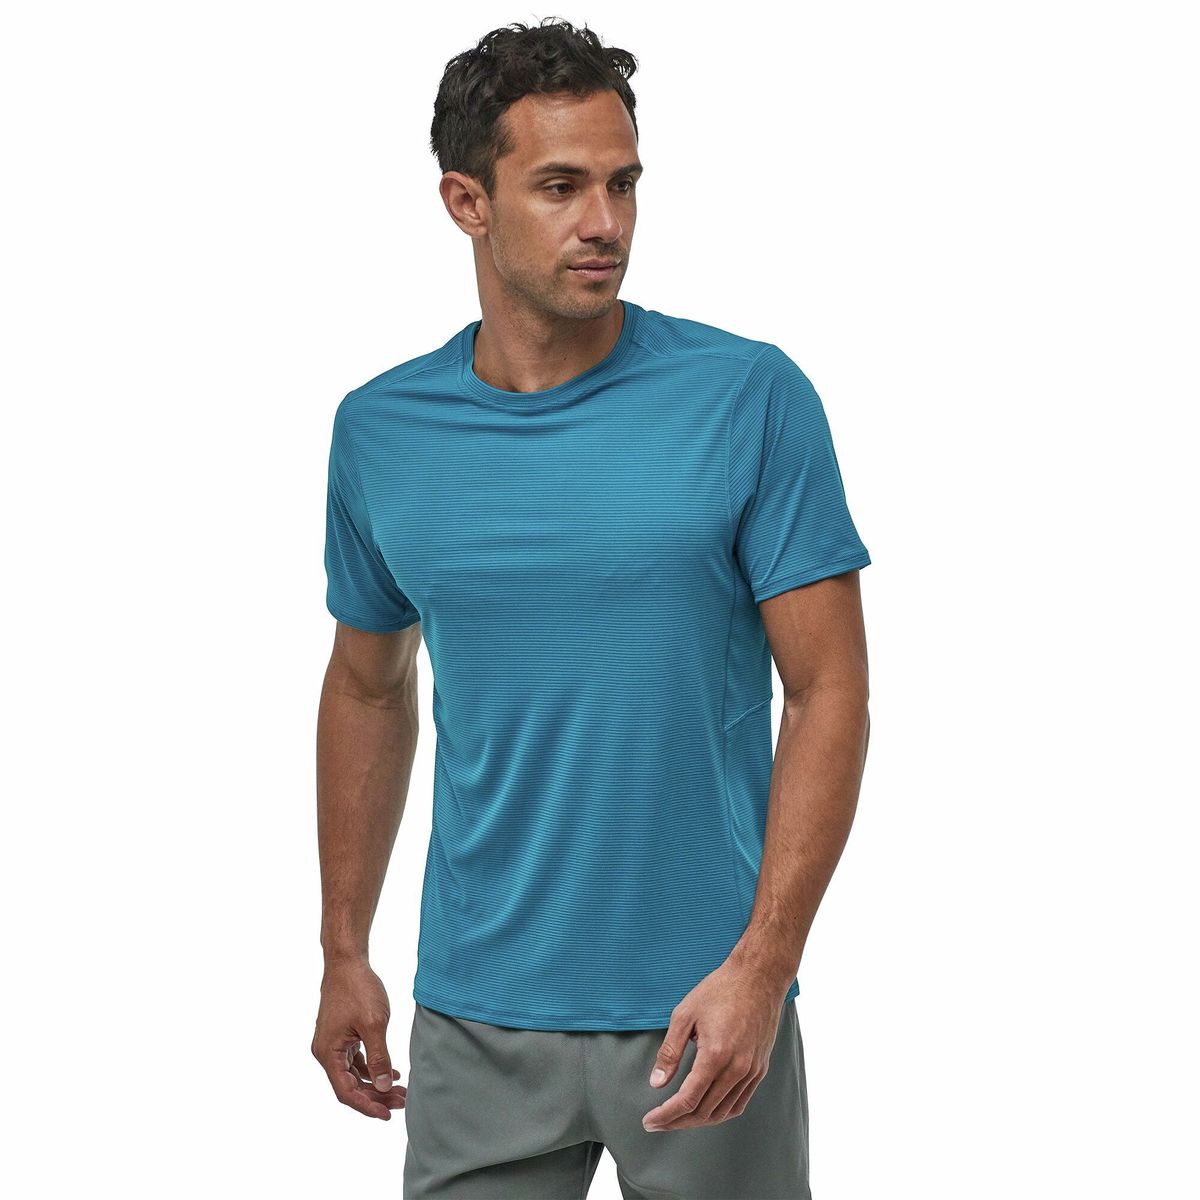 Patagonia Airchaser Shirt - Men's - Clothing